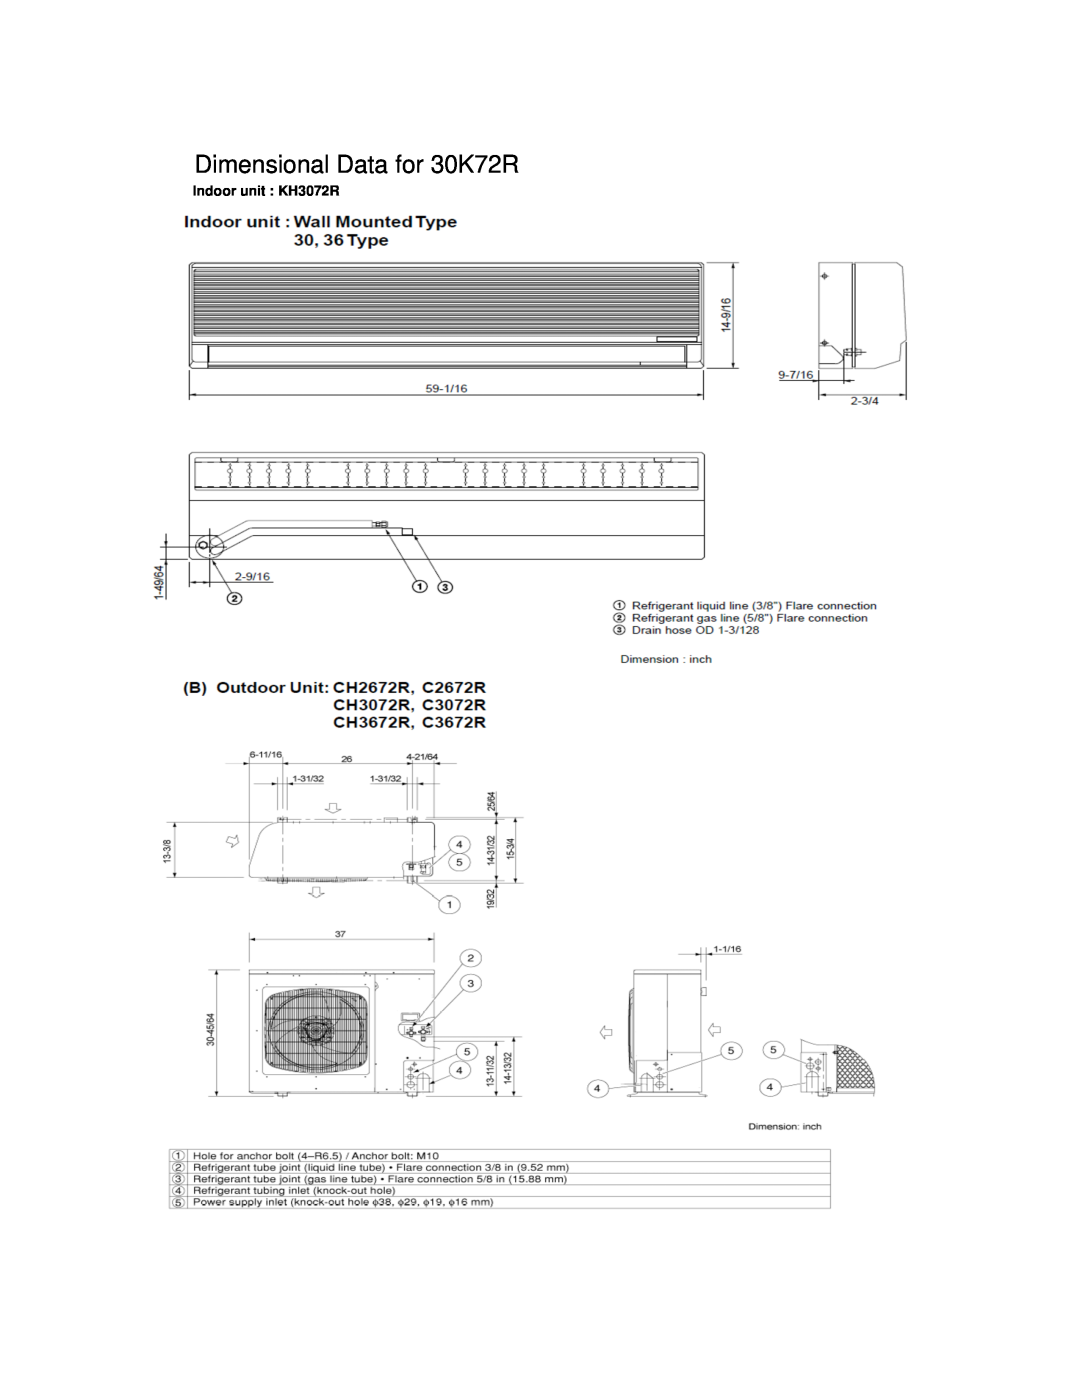 Sanyo manual Dimensional Data for 30K72R, Indoor unit KH3072R 